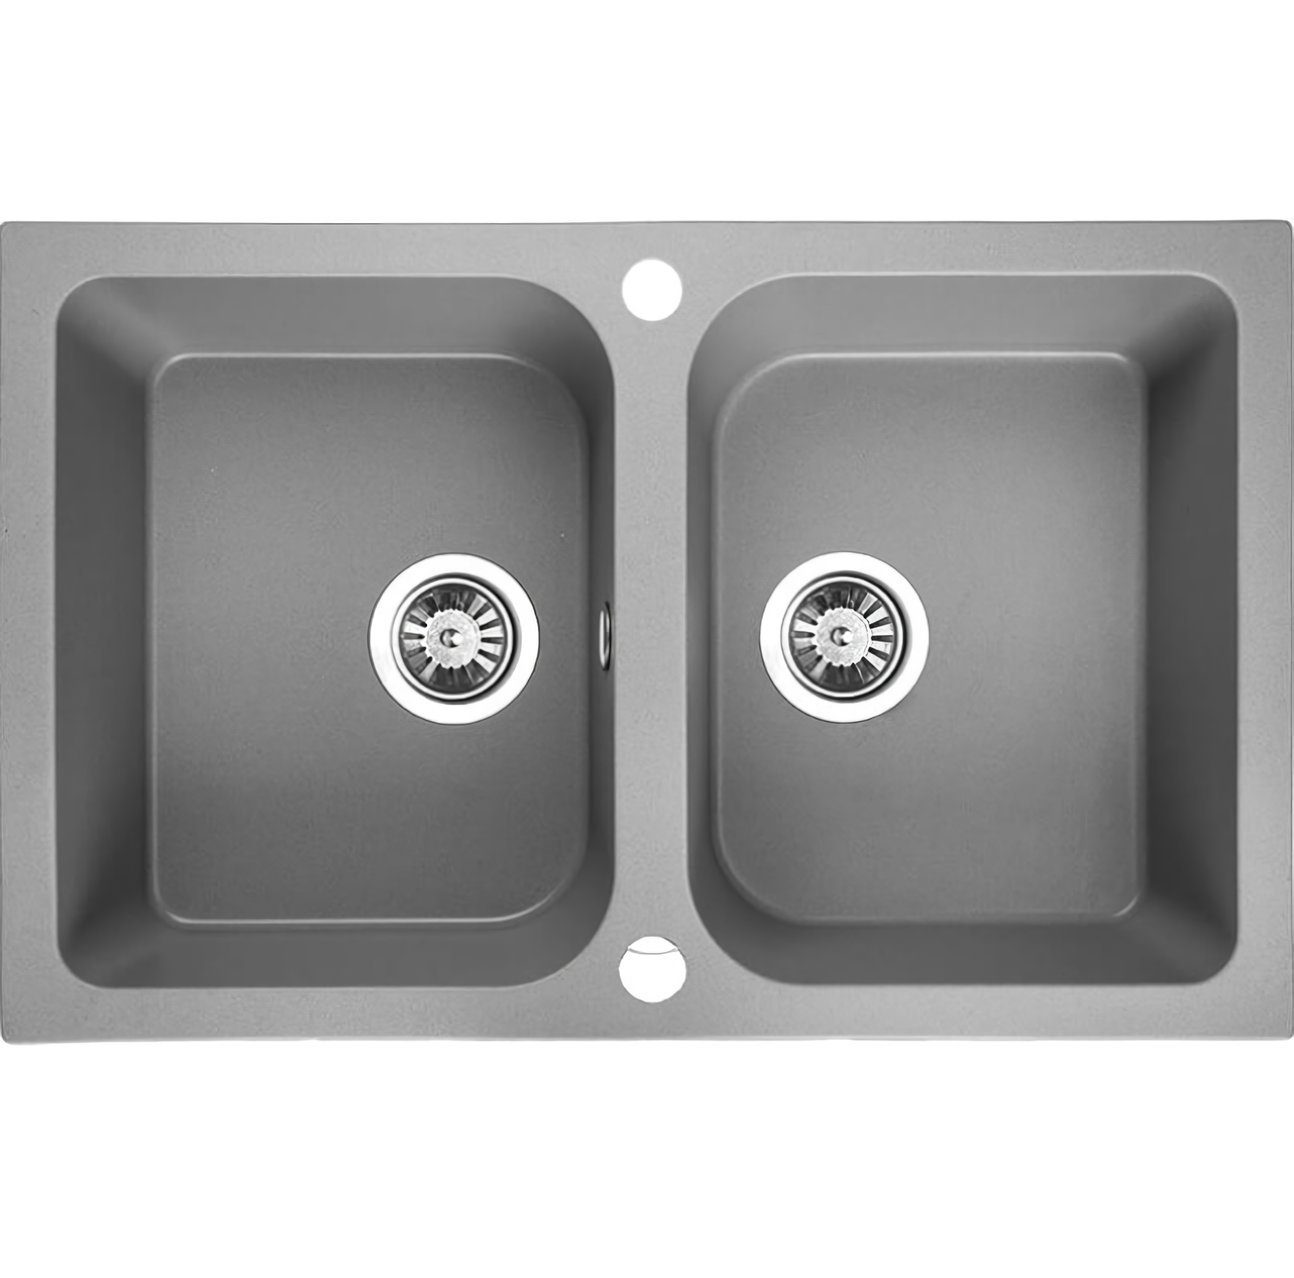 KOLMAN Küchenspüle Doppelbecken Celia Granitspüle, Rechteckig, 48/76 cm, Grau, Space Saving Siphon GRATIS